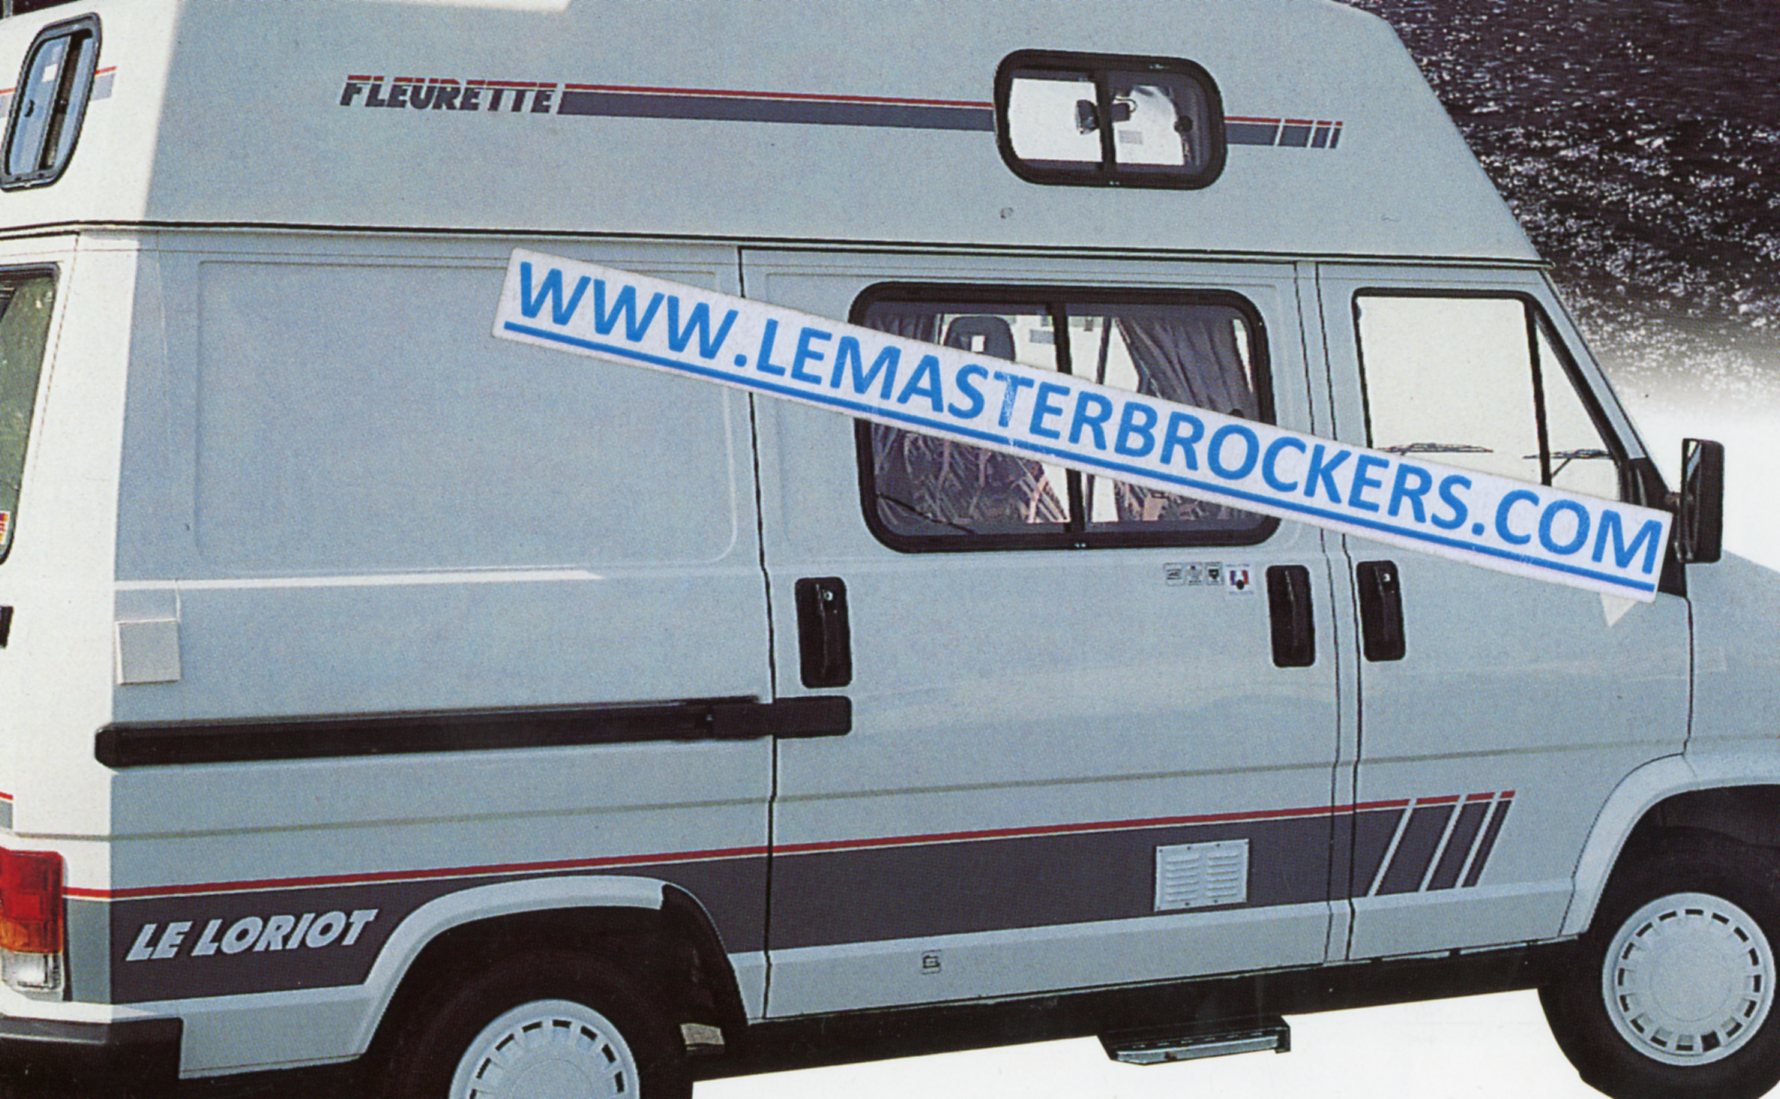 FLEURETTE-le-loriot-J5-1994-BROCHURE-CAMPING-CAR-vanlemasterbrockers